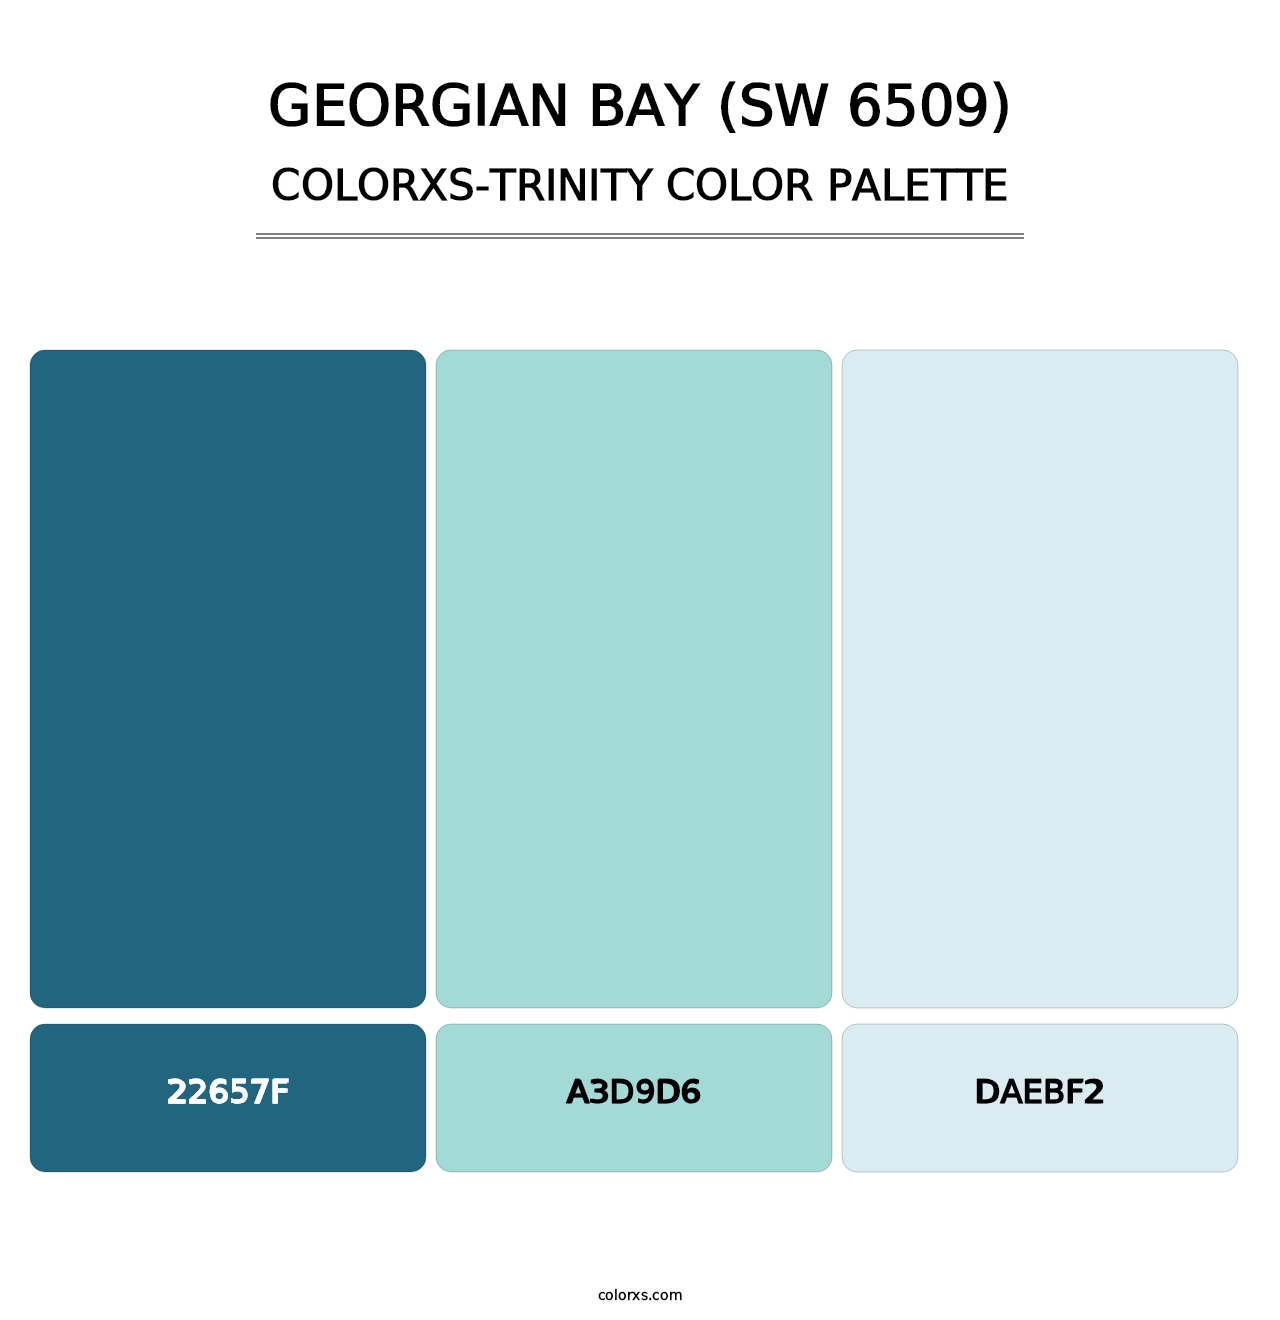 Georgian Bay (SW 6509) - Colorxs Trinity Palette